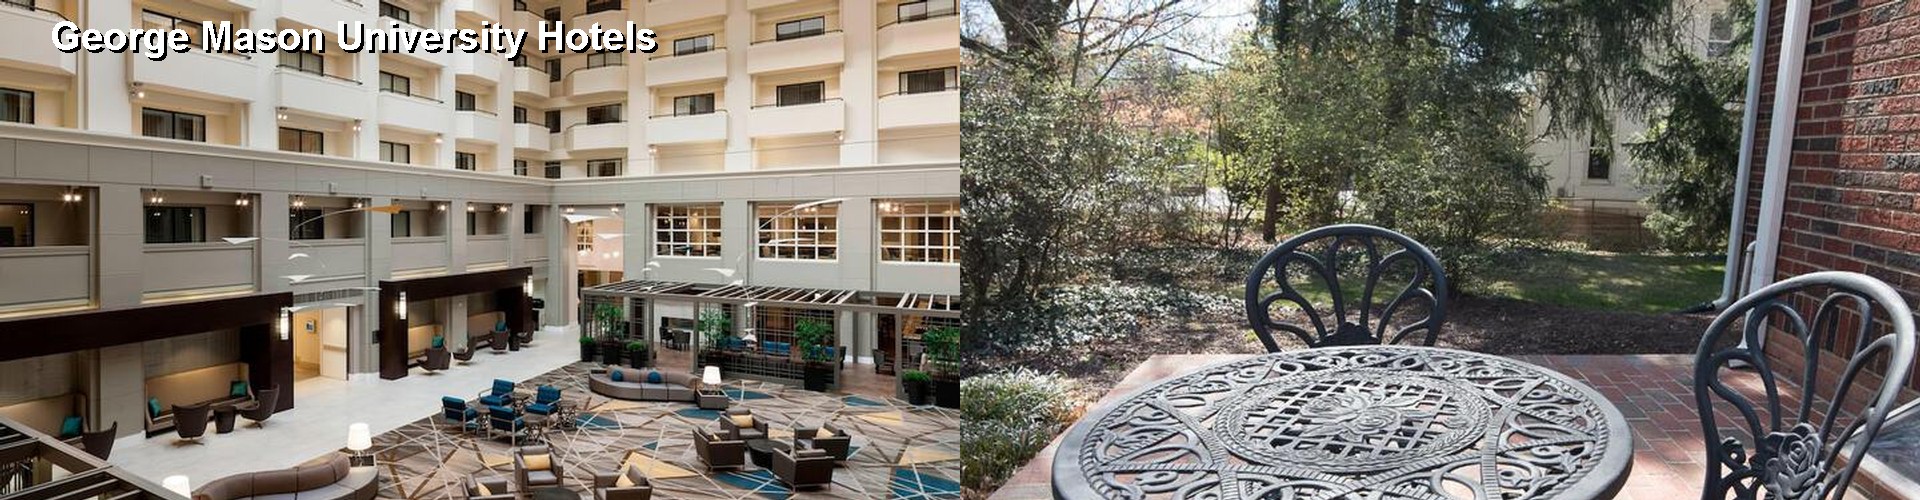 5 Best Hotels near George Mason University